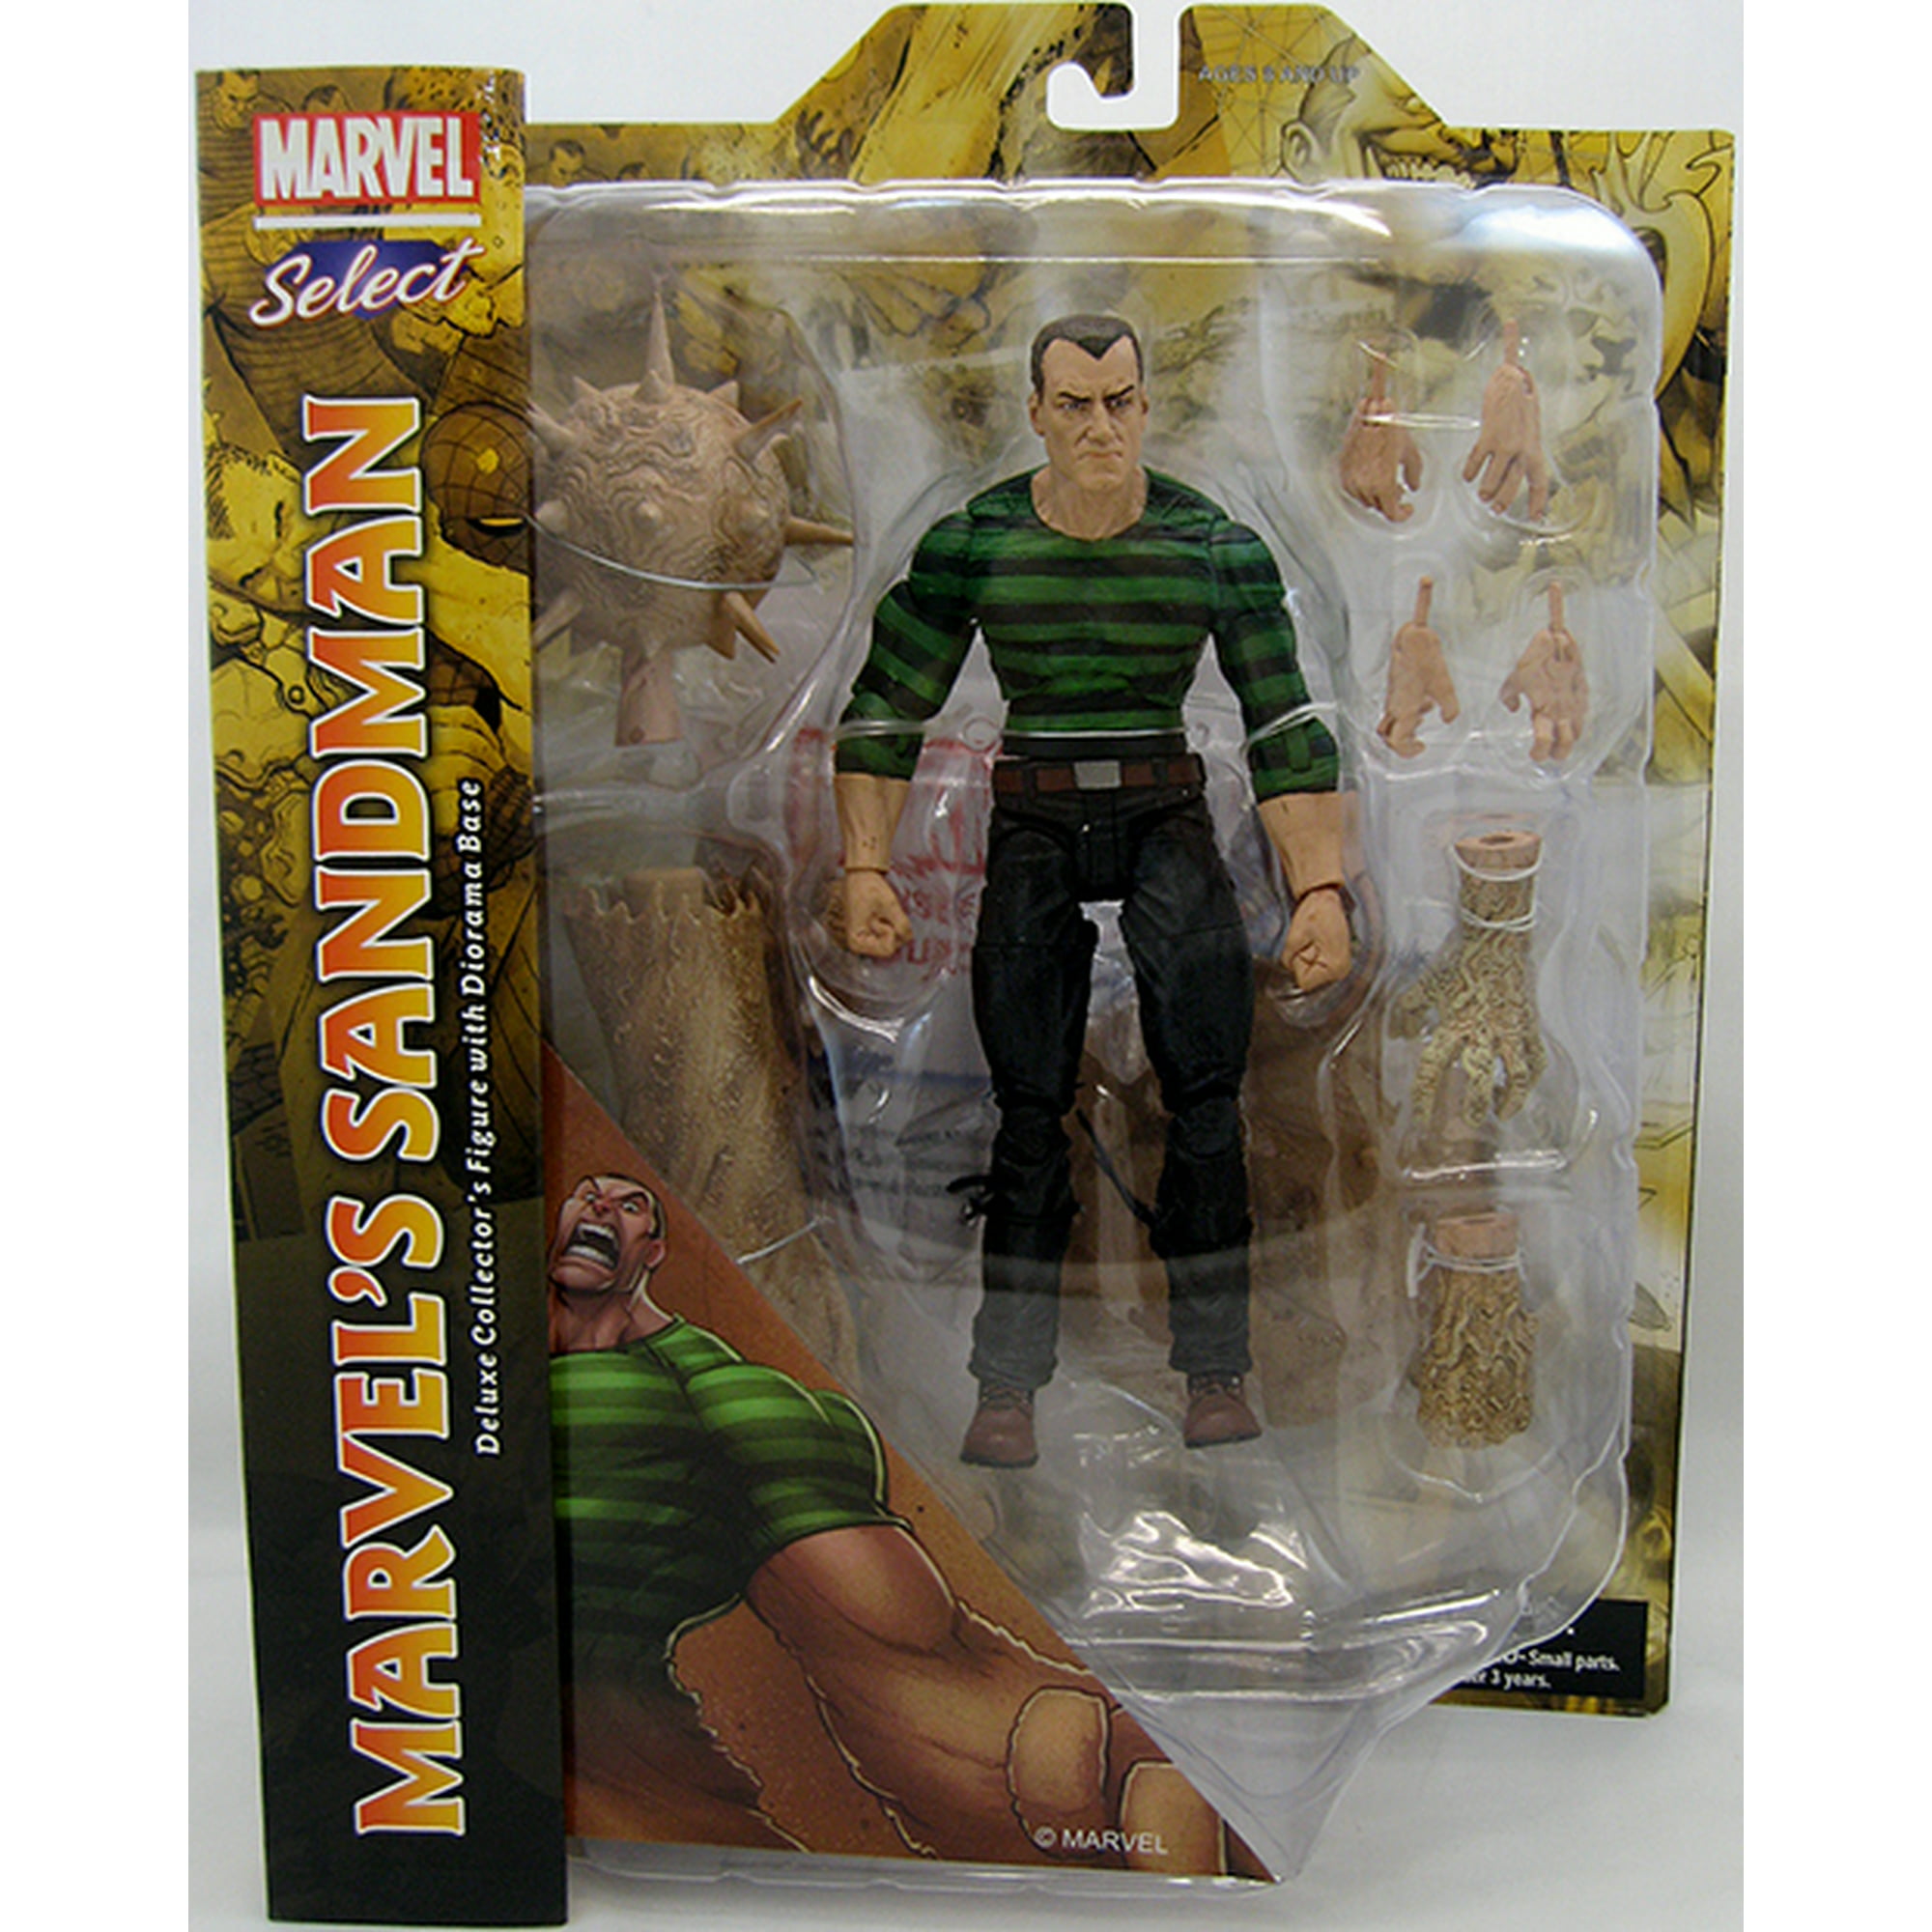 Marvel Select 7 Inch Action Figure Spider-Man Series - Sandman | Walmart  Canada